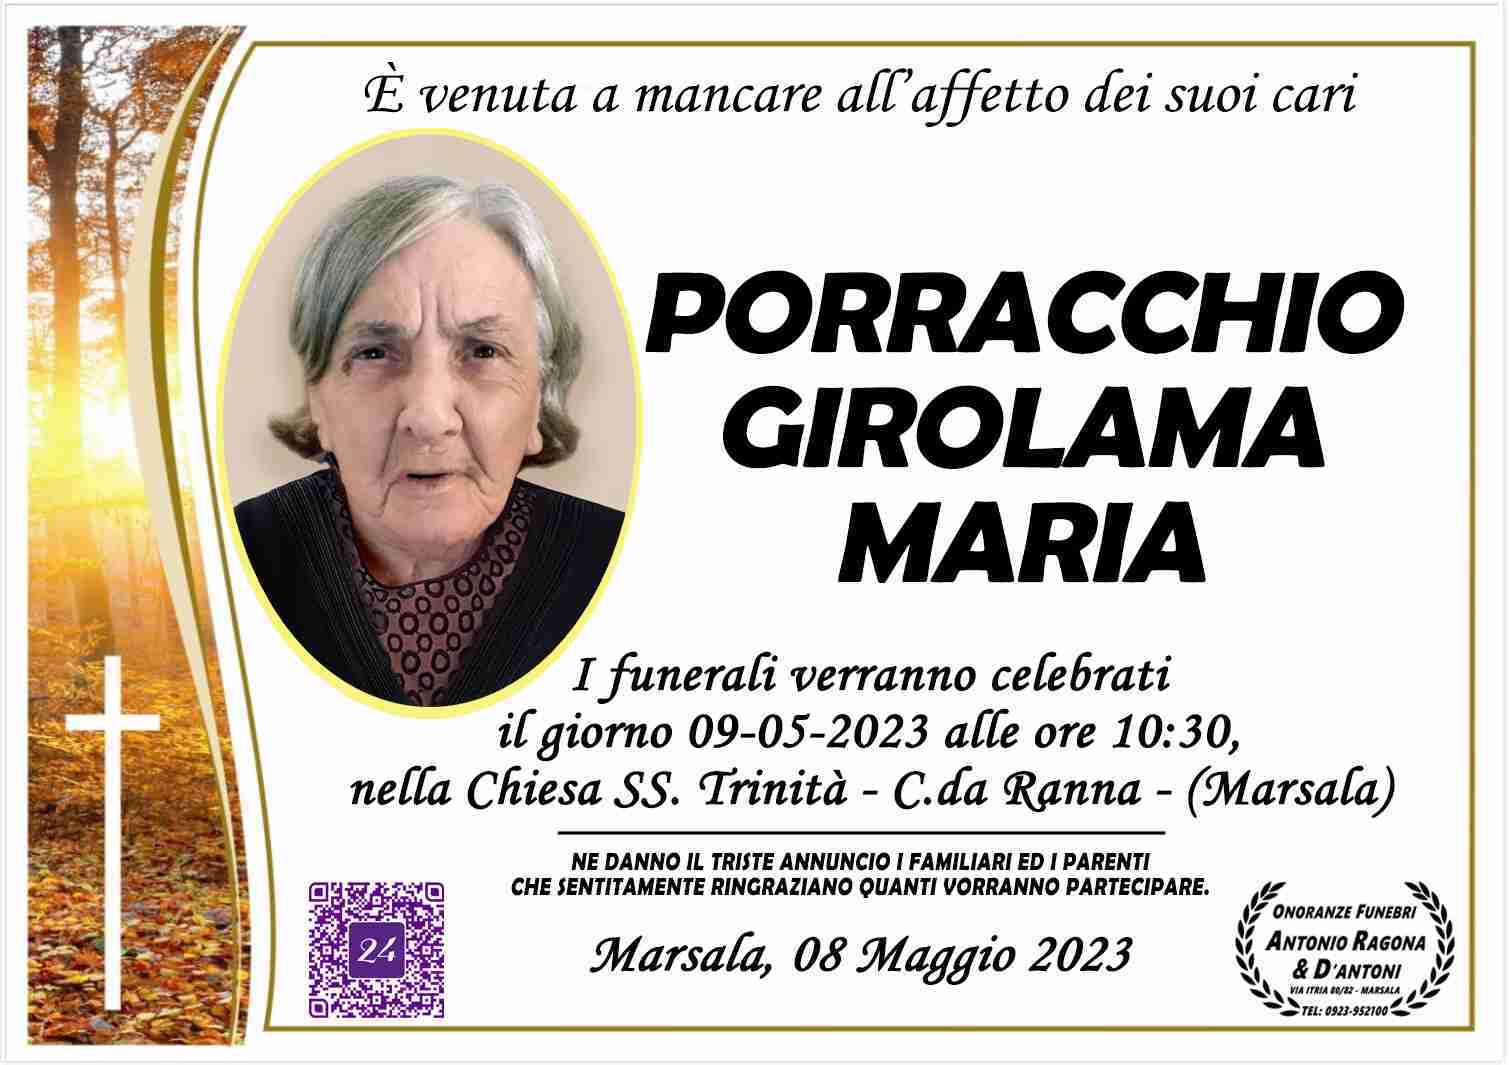 Girolama Maria Porracchio